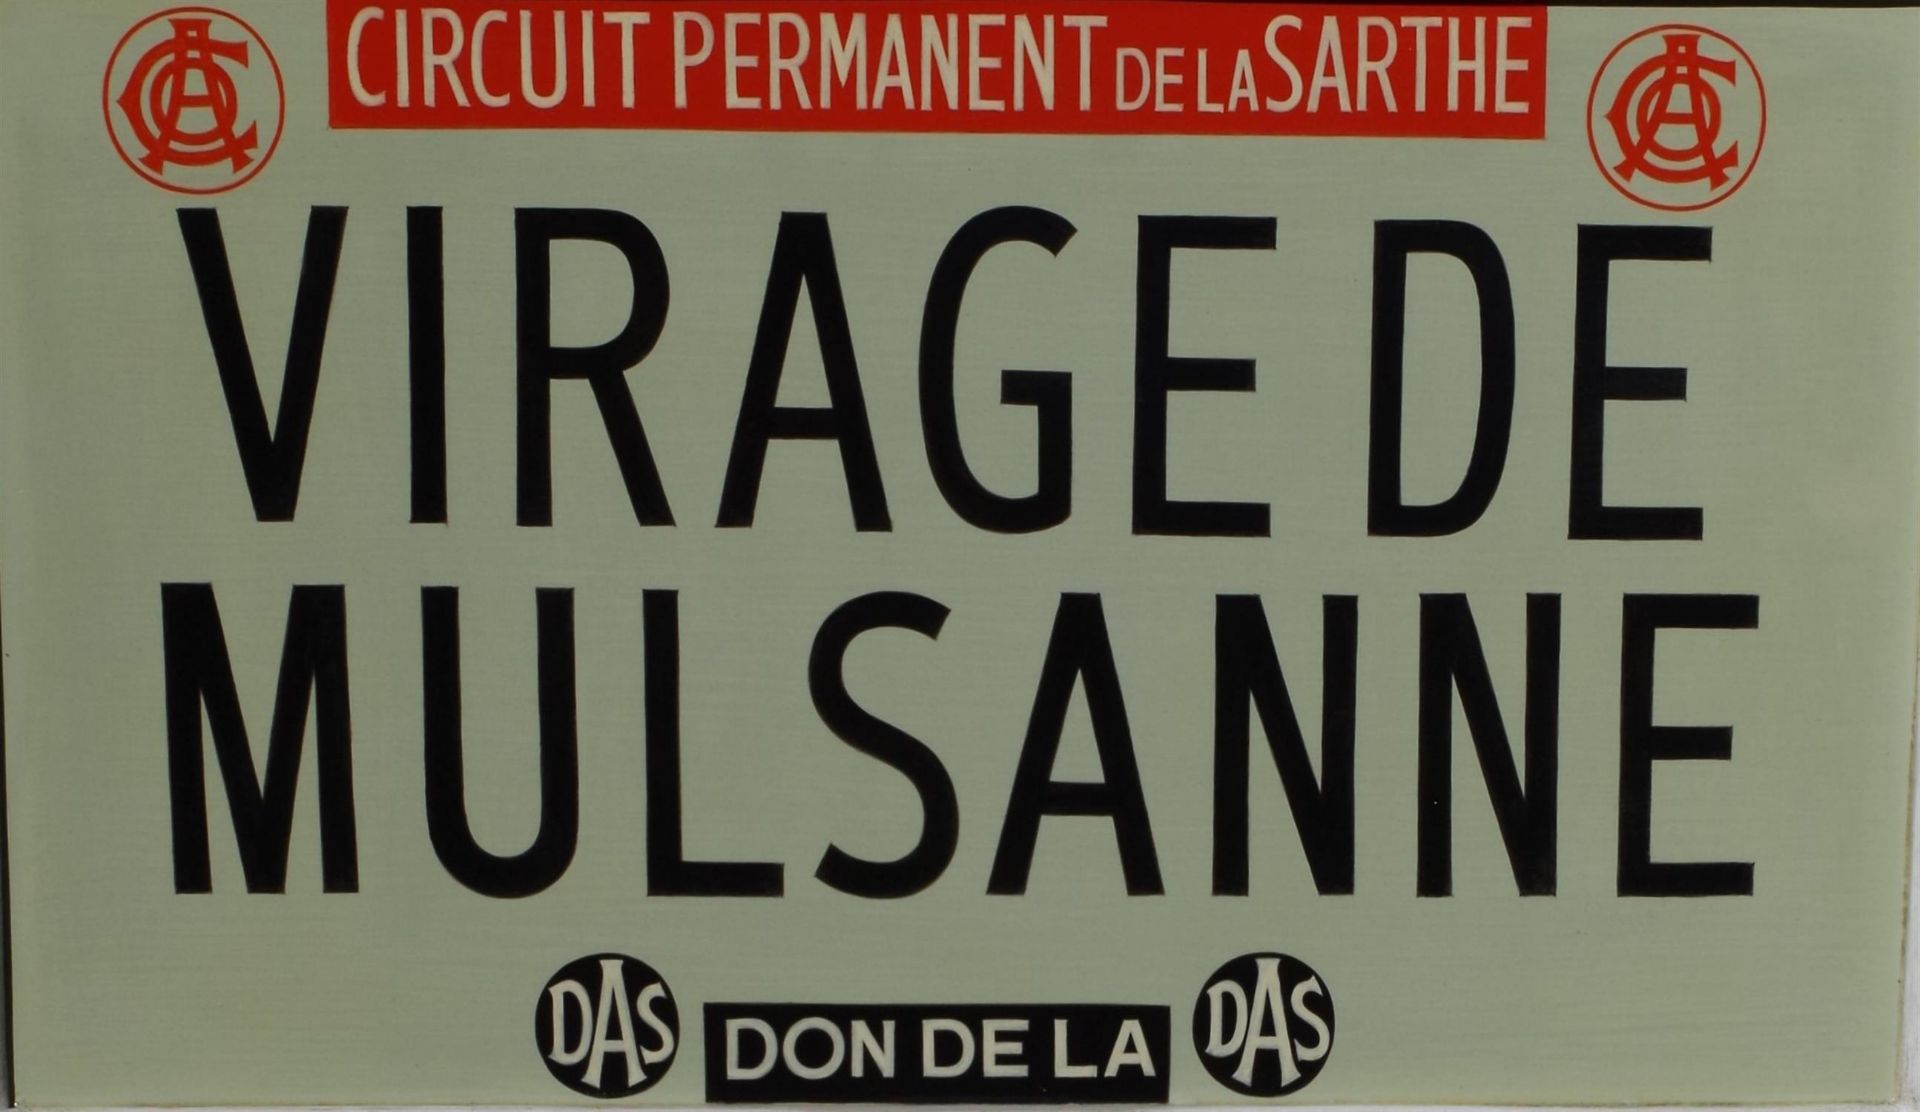 Full-sized Replica of the Le Mans Roadside Sign 'Mulsanne Corner' - Image 2 of 4